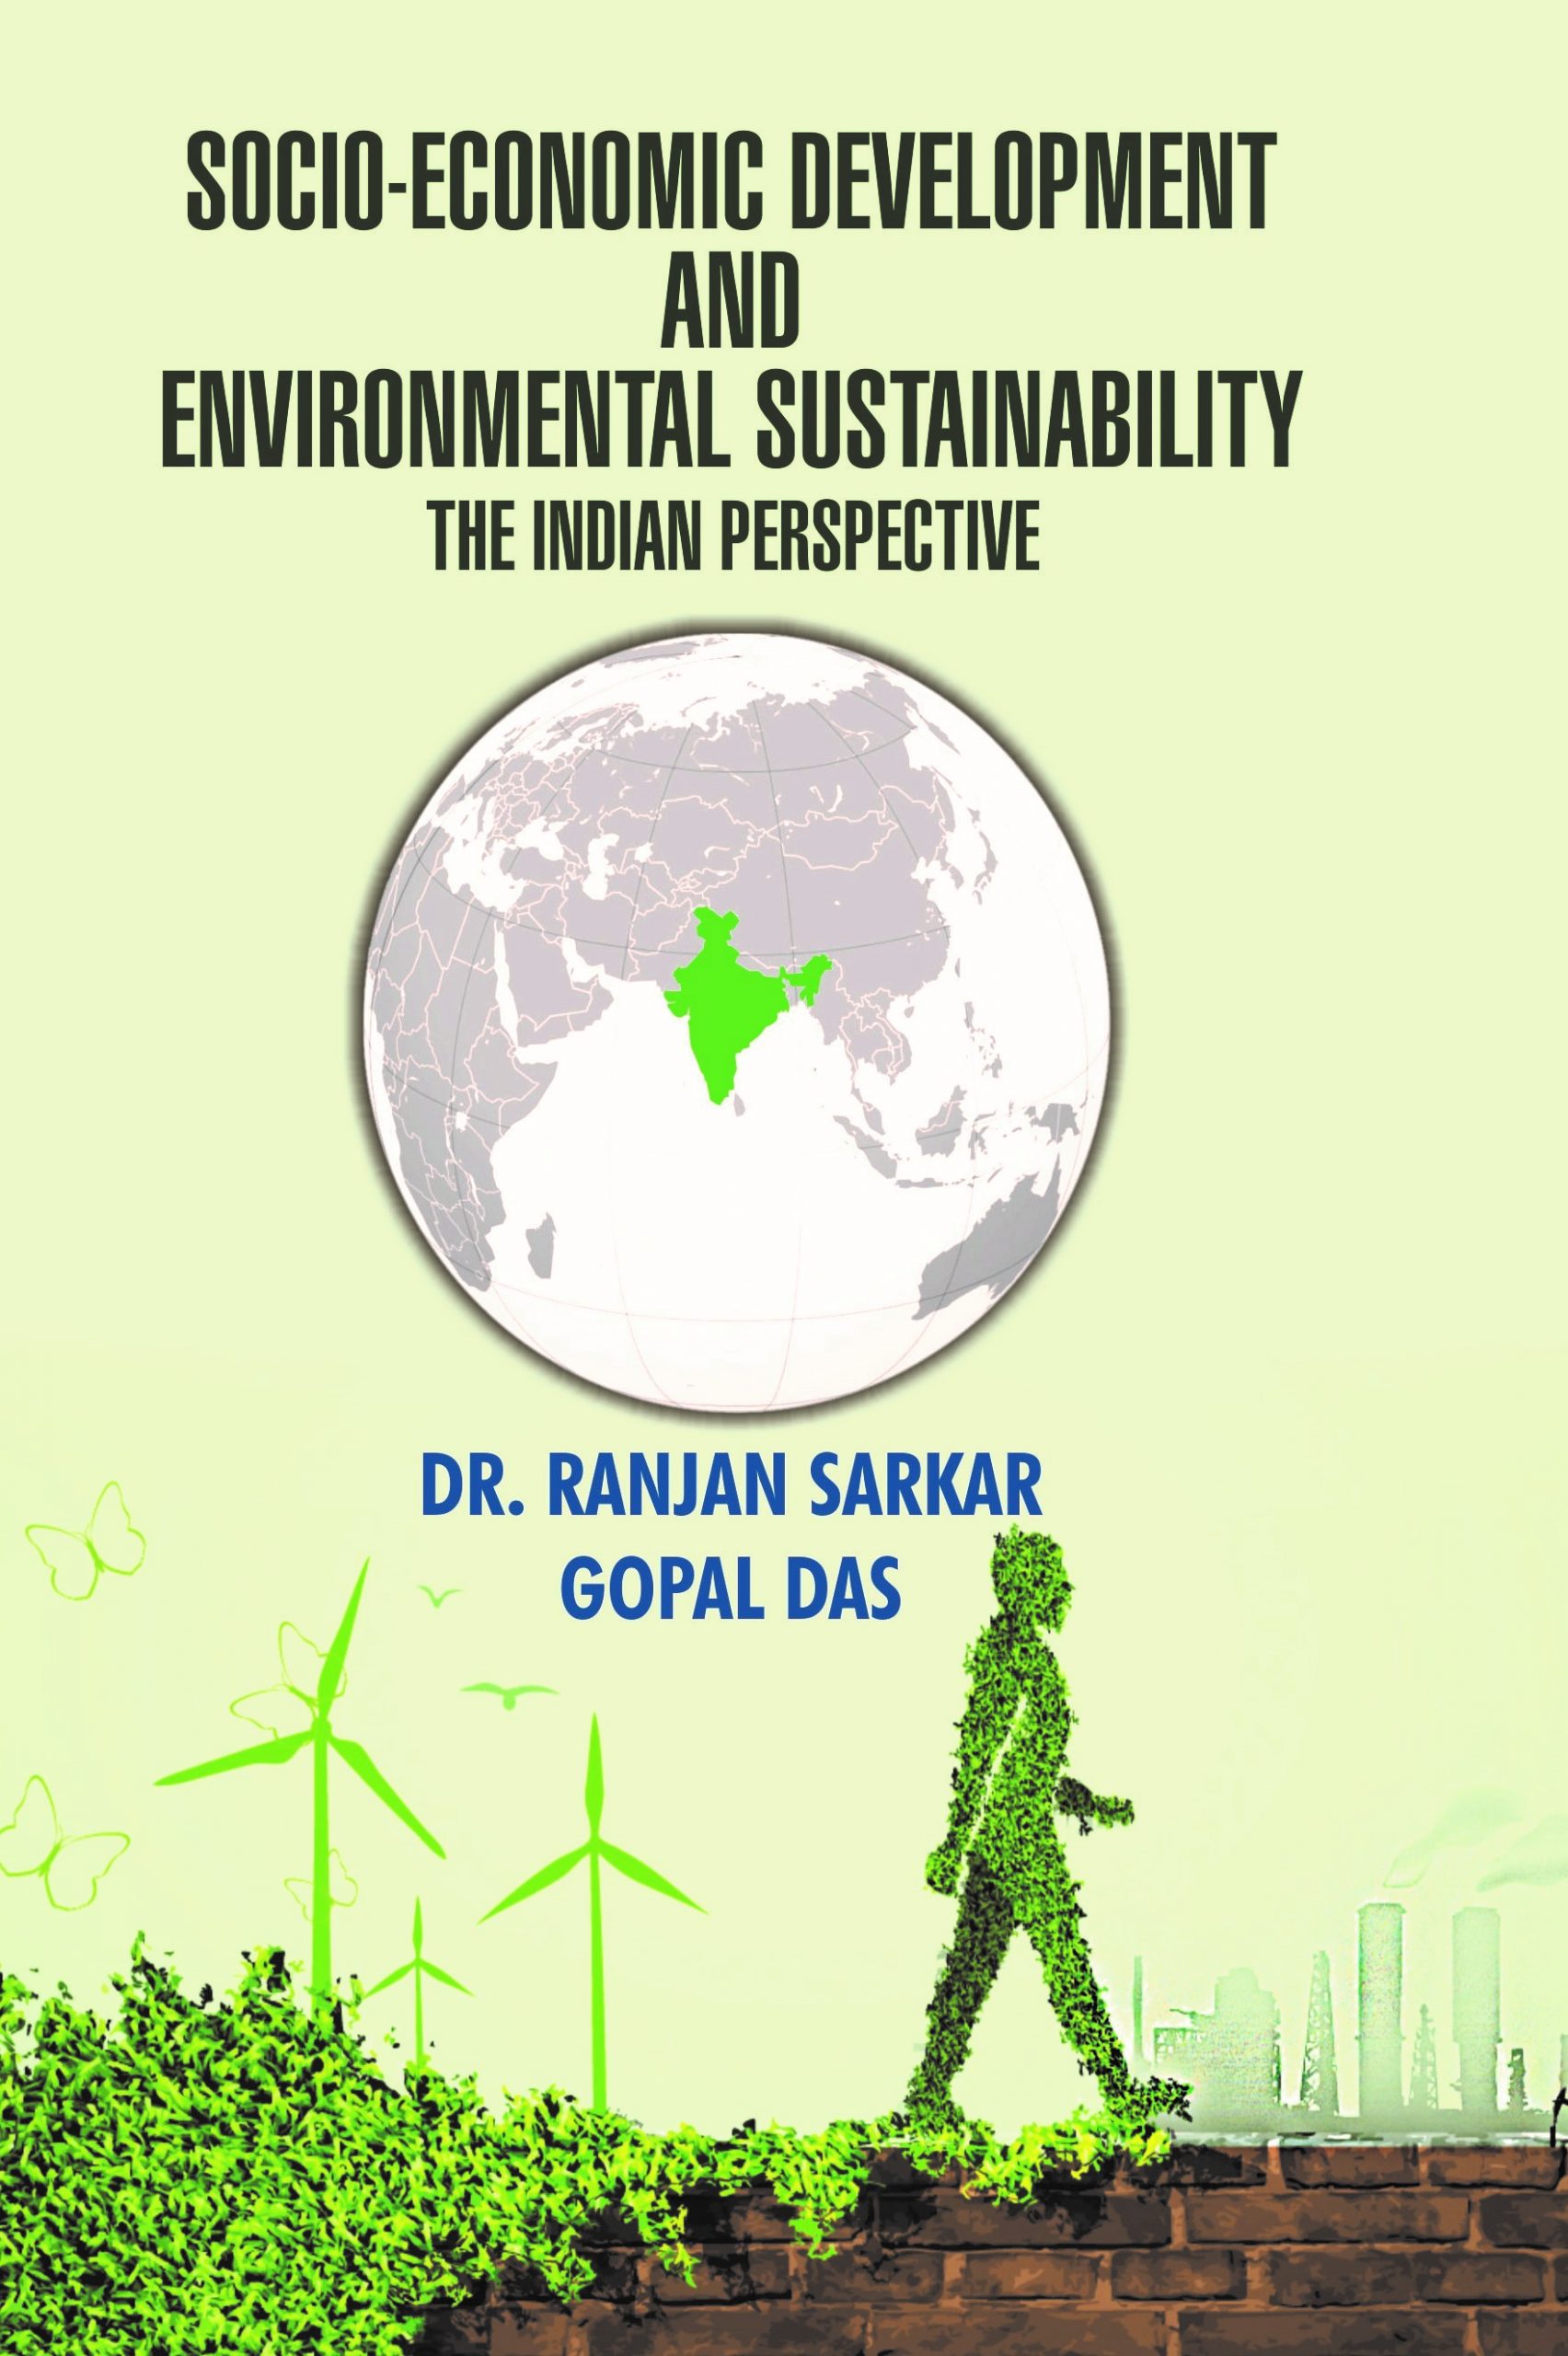 “The Socio-Economic Development and Environmental Sustainability The Indian Perspective” presents a multi-dimensional facet of Socio-Economic Development and Environmental Sustainability in India.